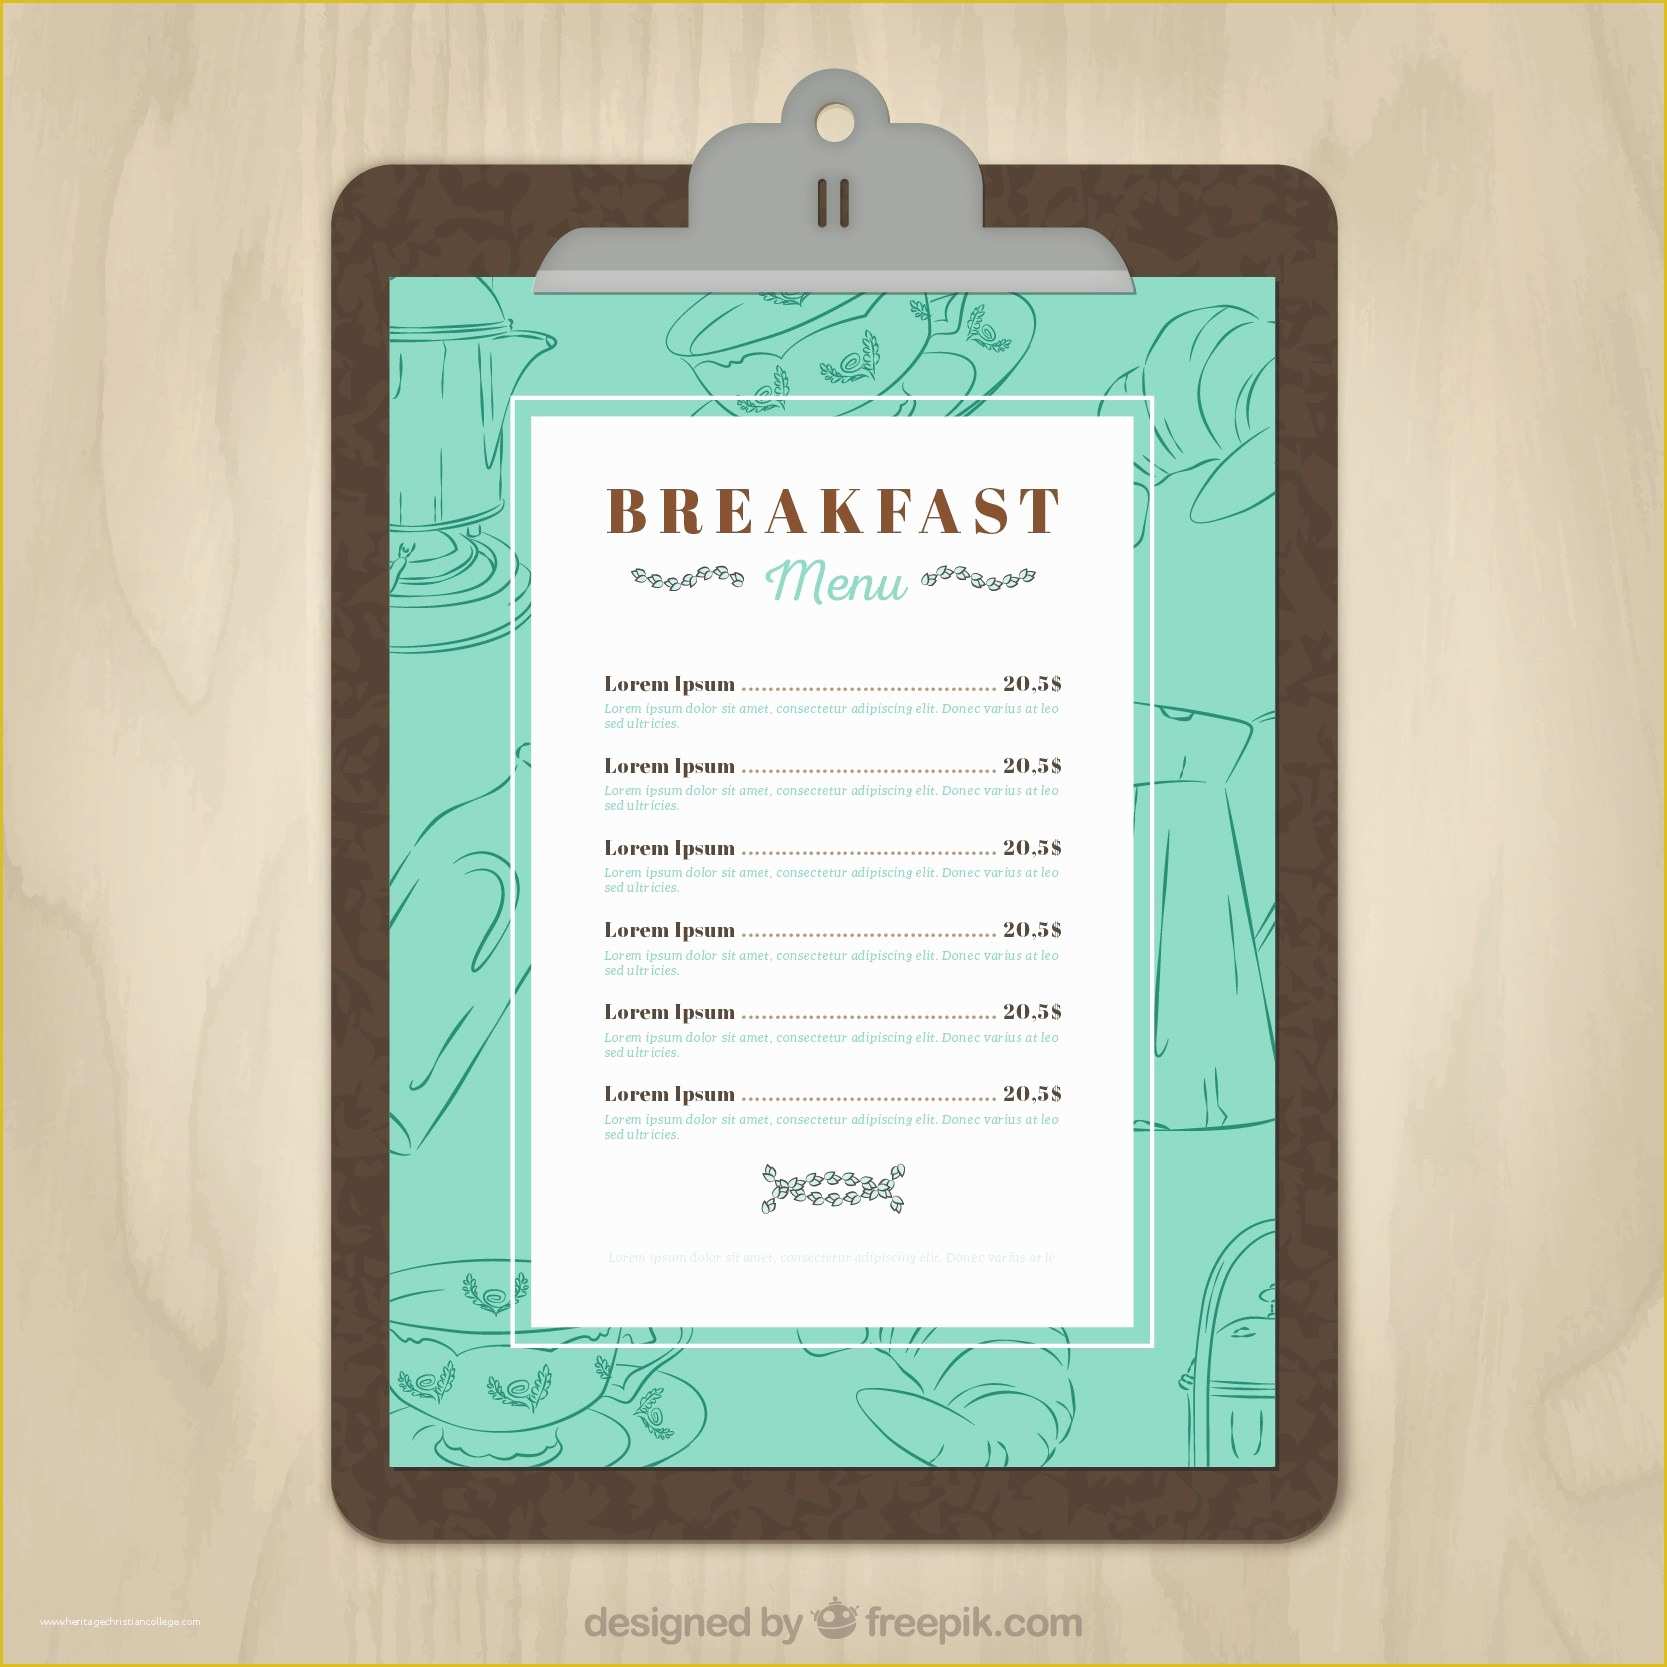 Specials Menu Template Free Of 11 Free Sample Breakfast Menu Templates Printable Samples